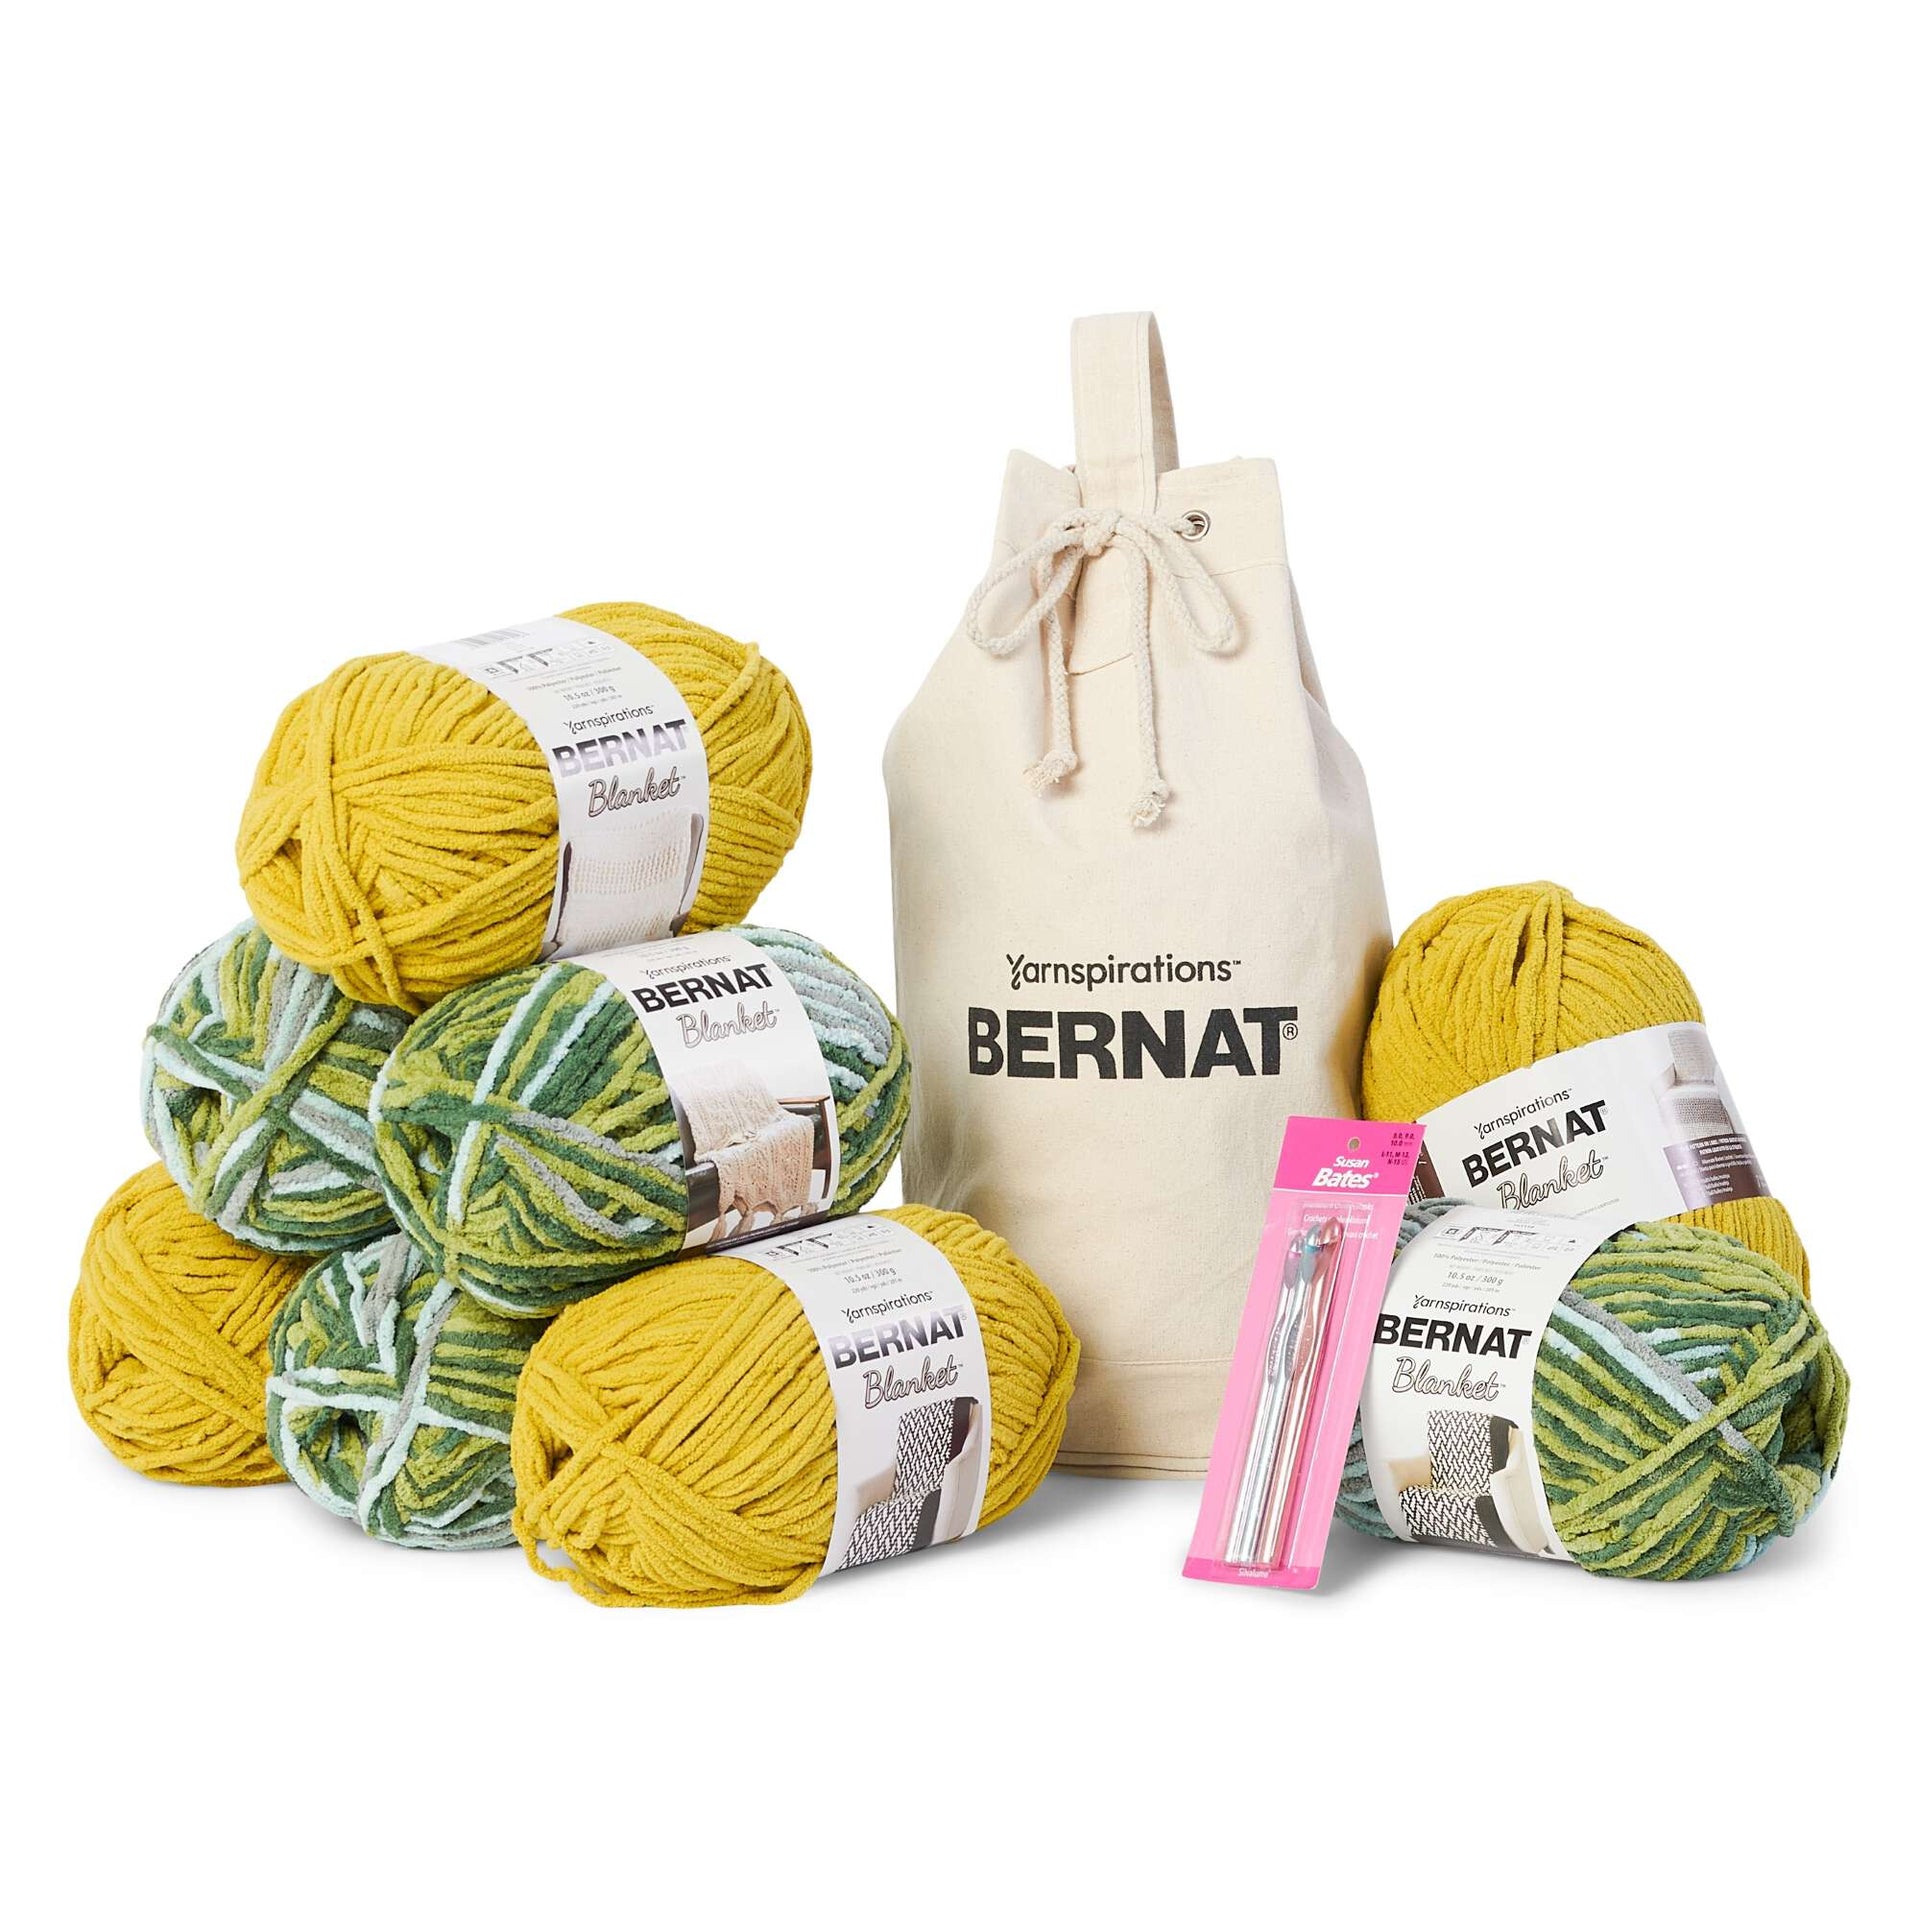 Bernat Blanket Bb 2 Pack, Multi Color Yarn, Stripes, Sailor's Delight